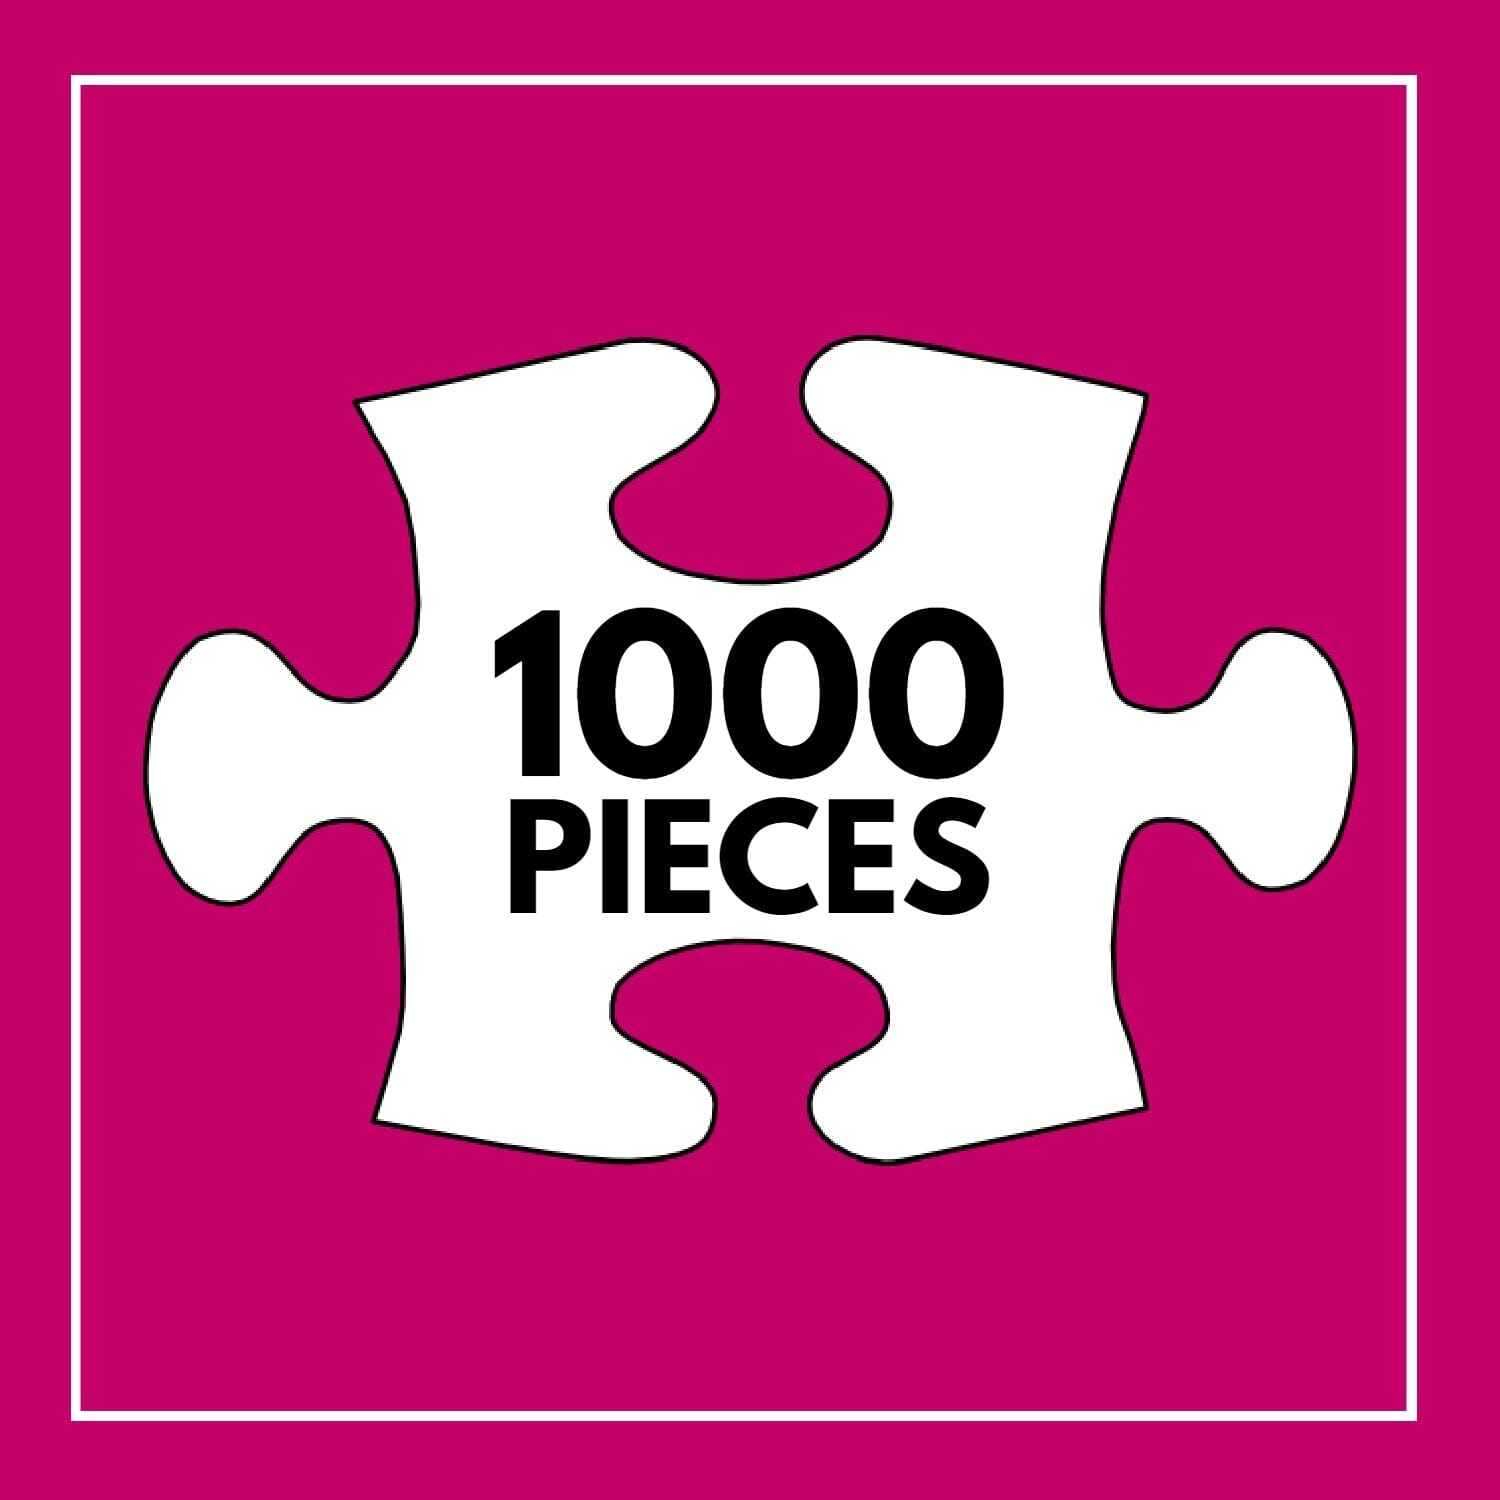 Celestial Frida: Colors of The Sky - 1000 Piece Jigsaw Puzzle Jigsaw Puzzles Cross & Glory